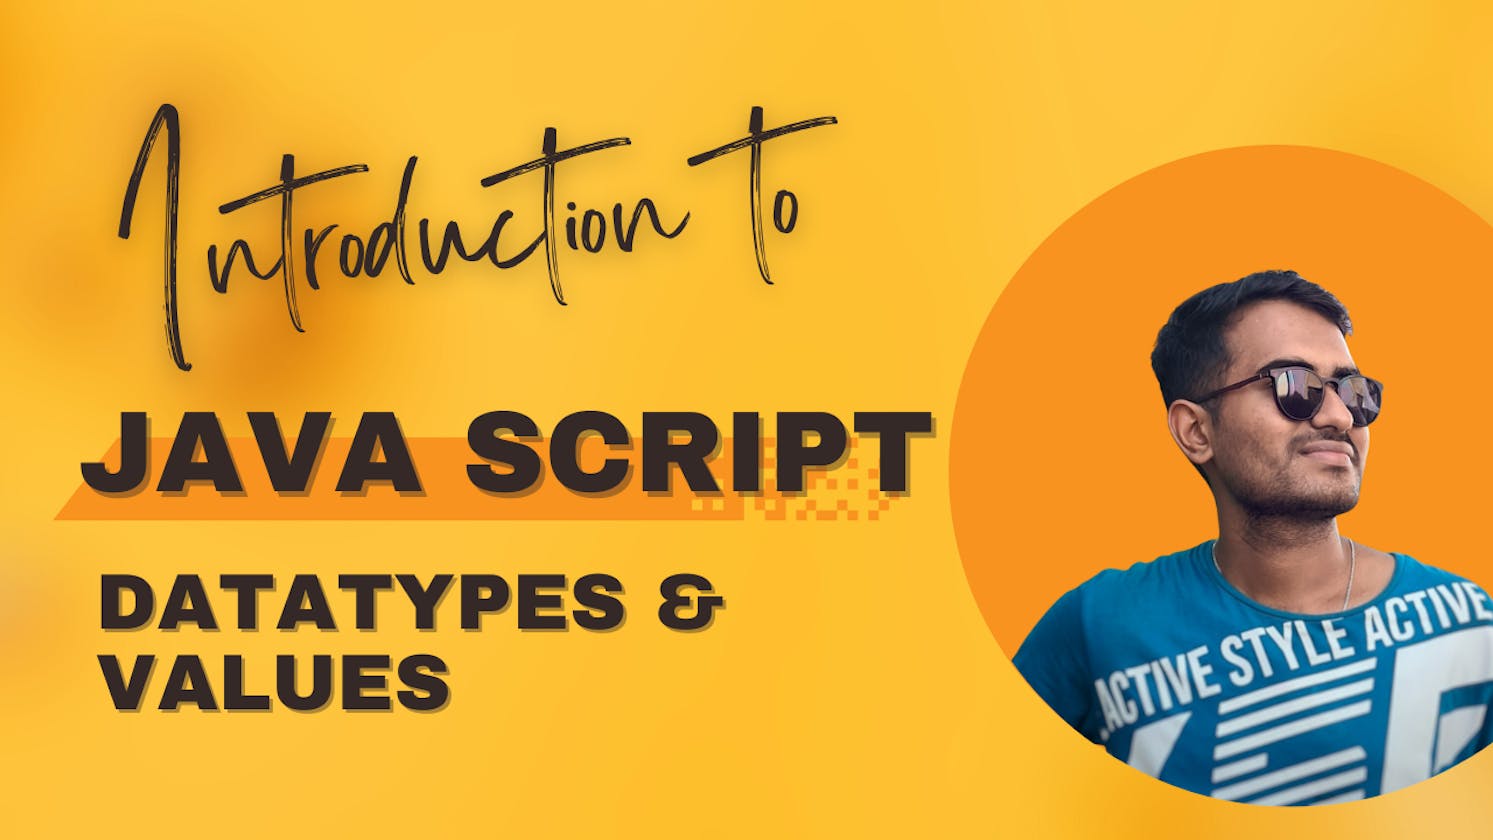 JavaScript Introduction